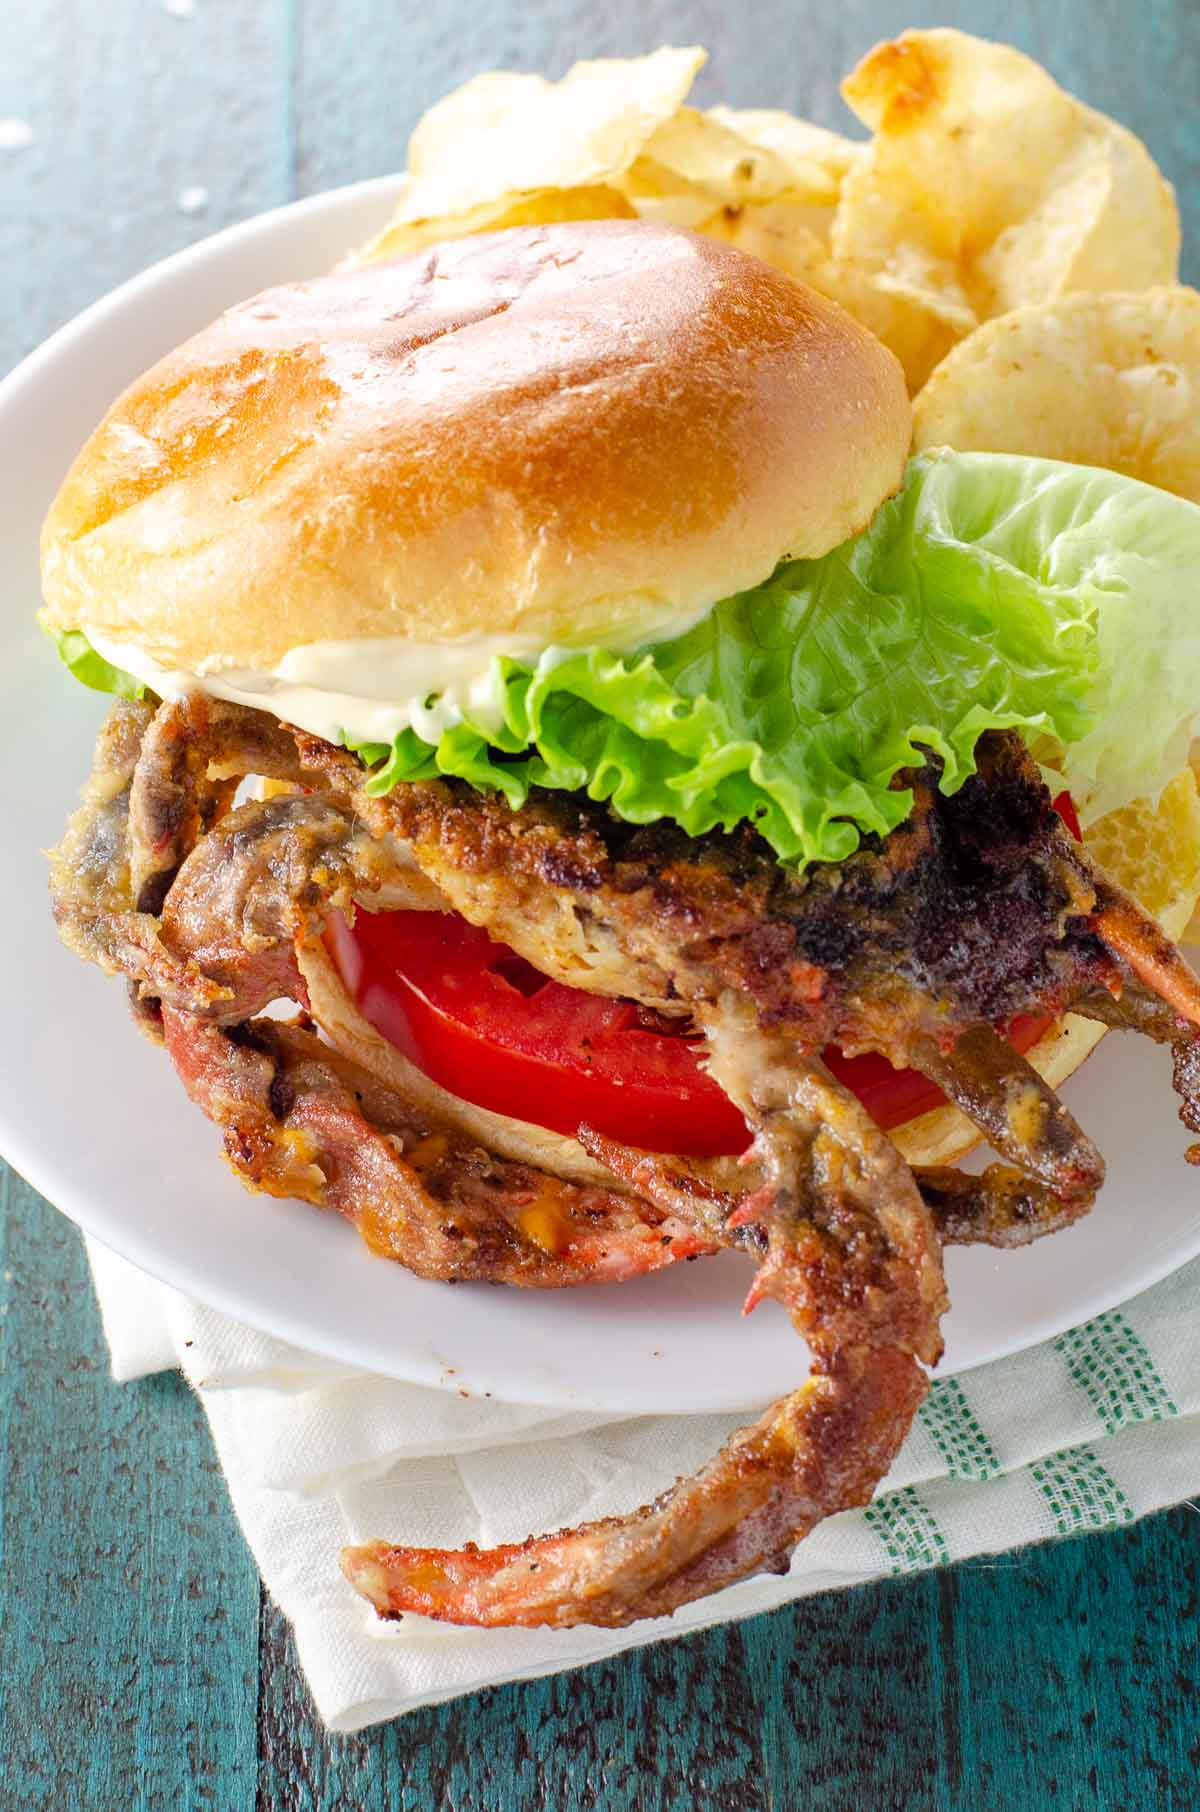 soft shell crab sandwich with lettuce, tomato, and mayo on a brioche bun